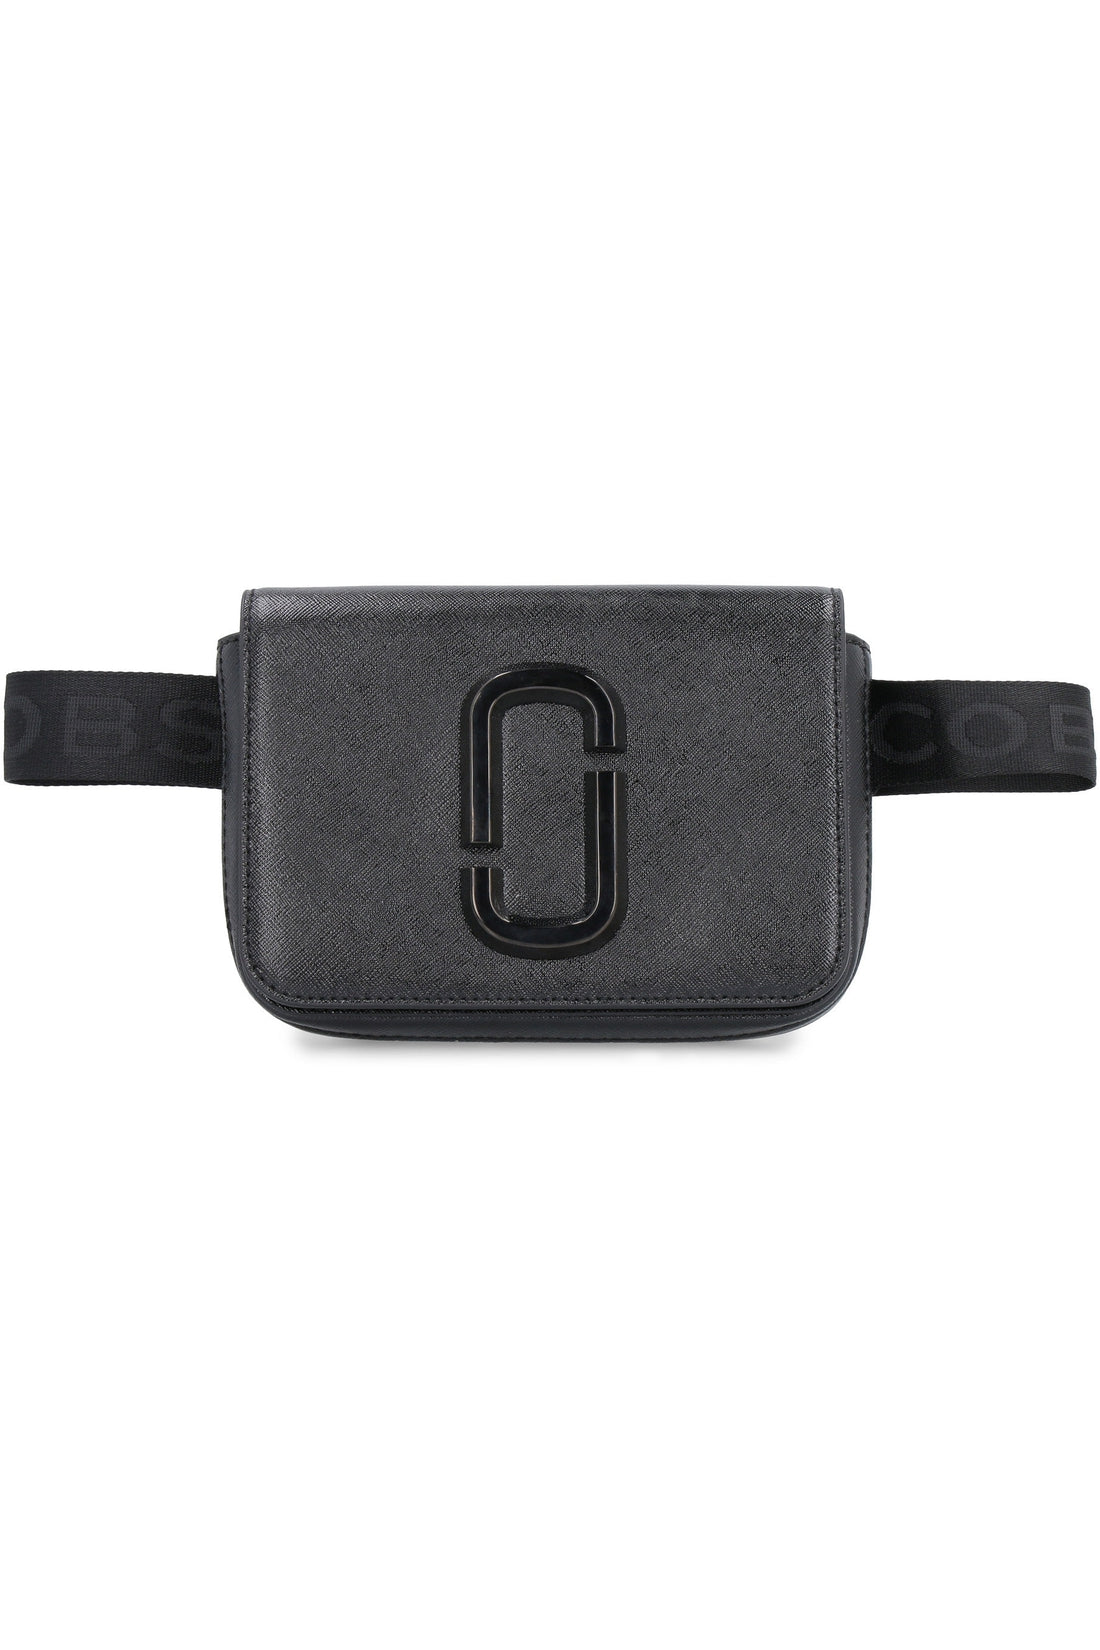 Marc Jacobs-OUTLET-SALE-Hip Shot leather belt bag-ARCHIVIST